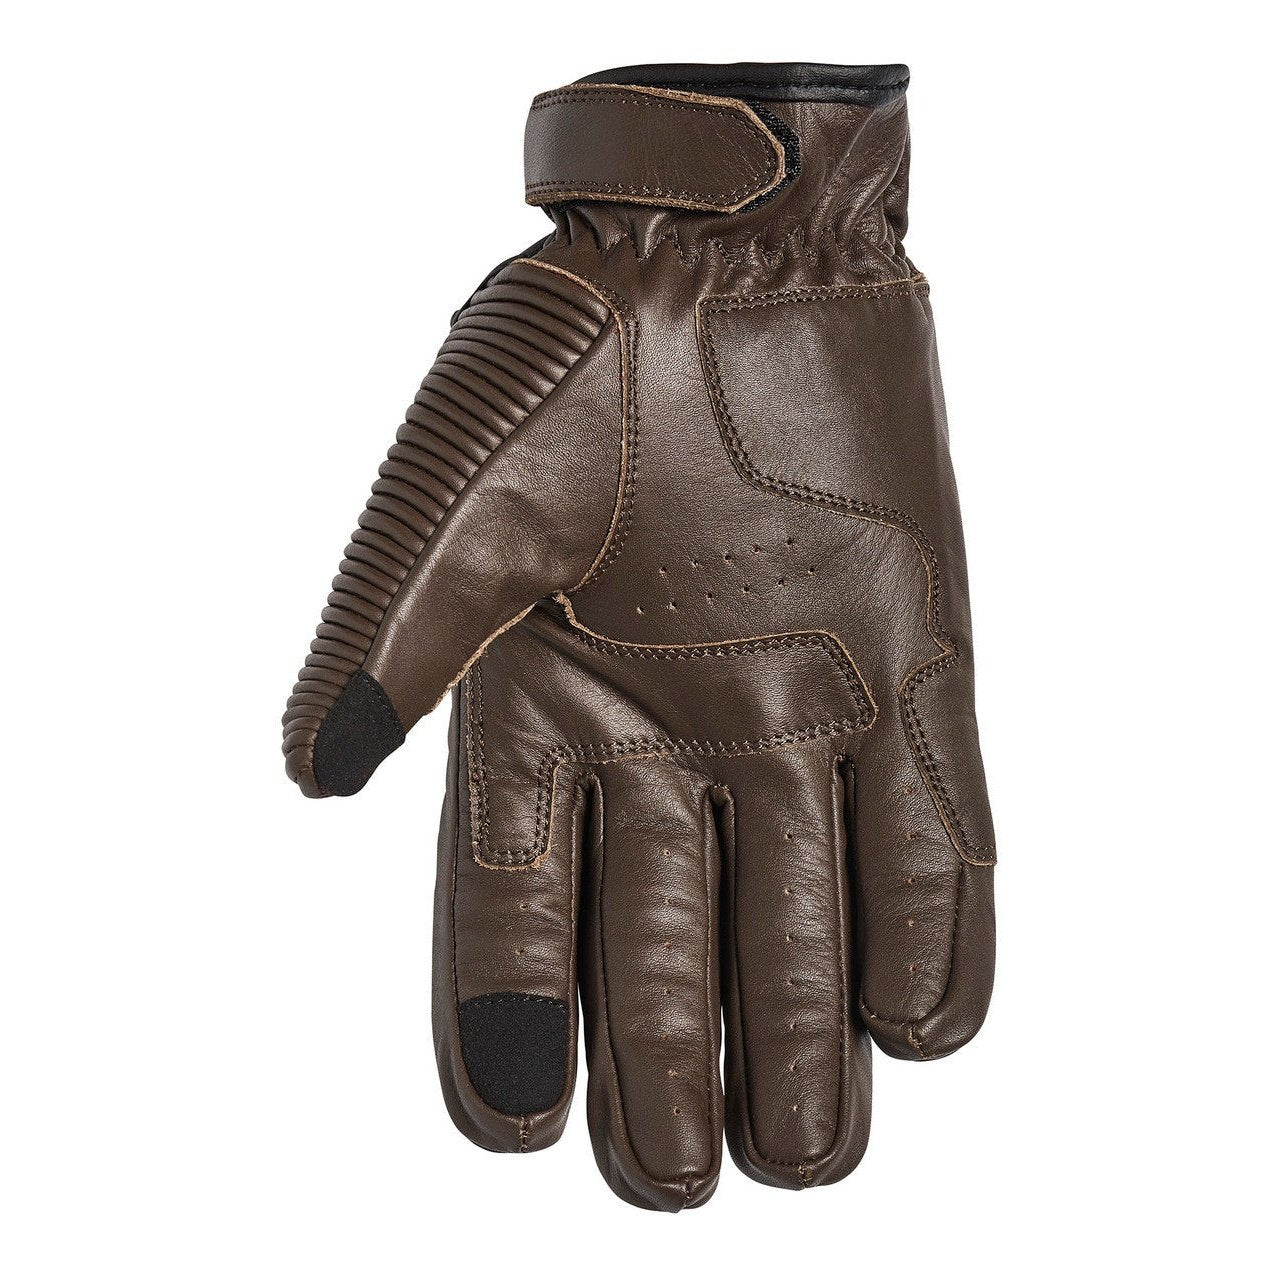 Molino 74 Gloves